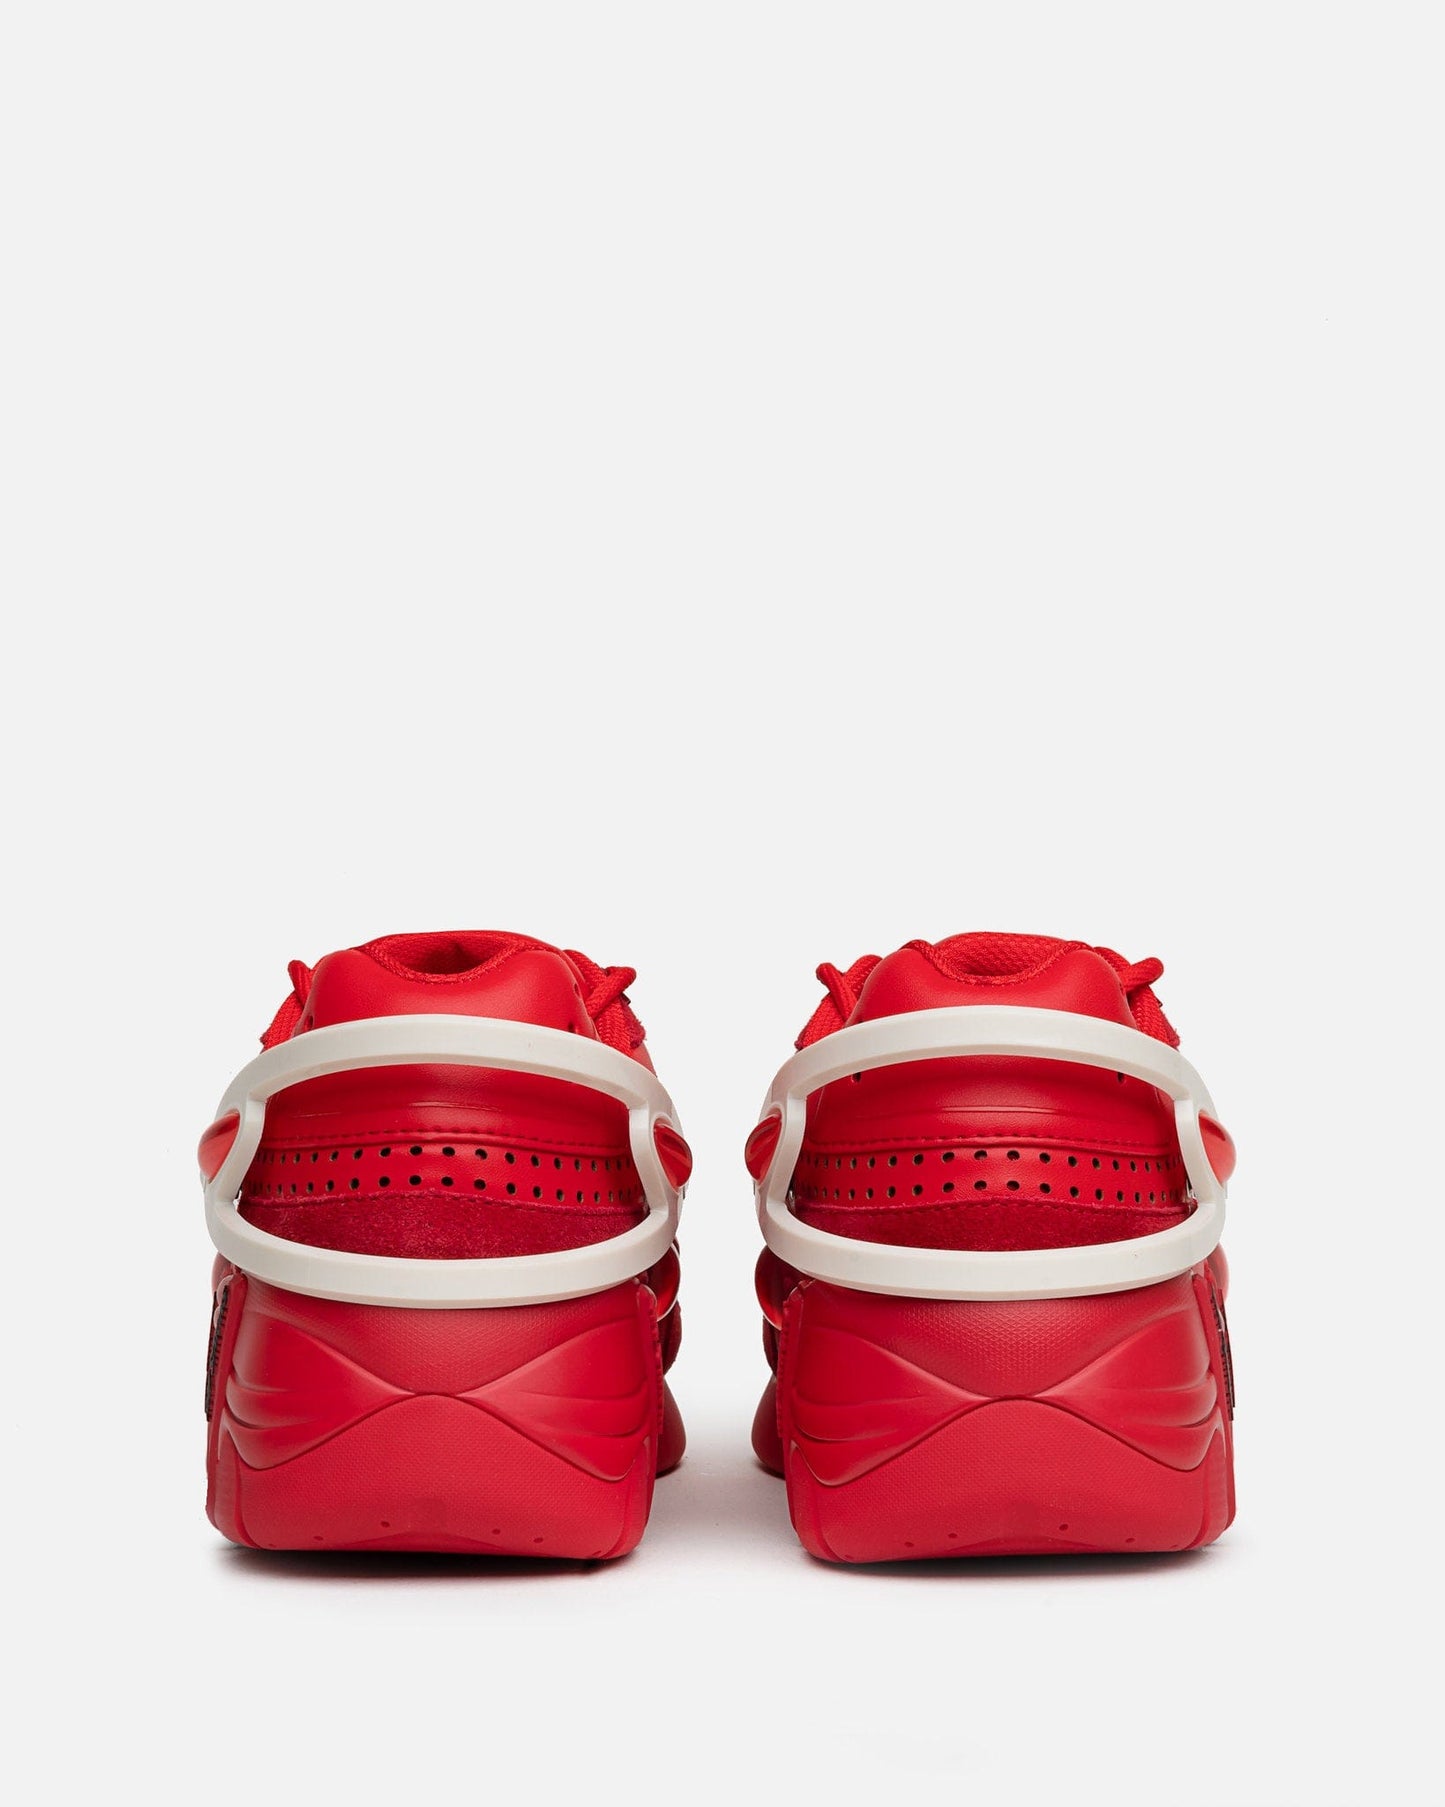 Raf Simons Men's Sneakers Cylon-21 in Red